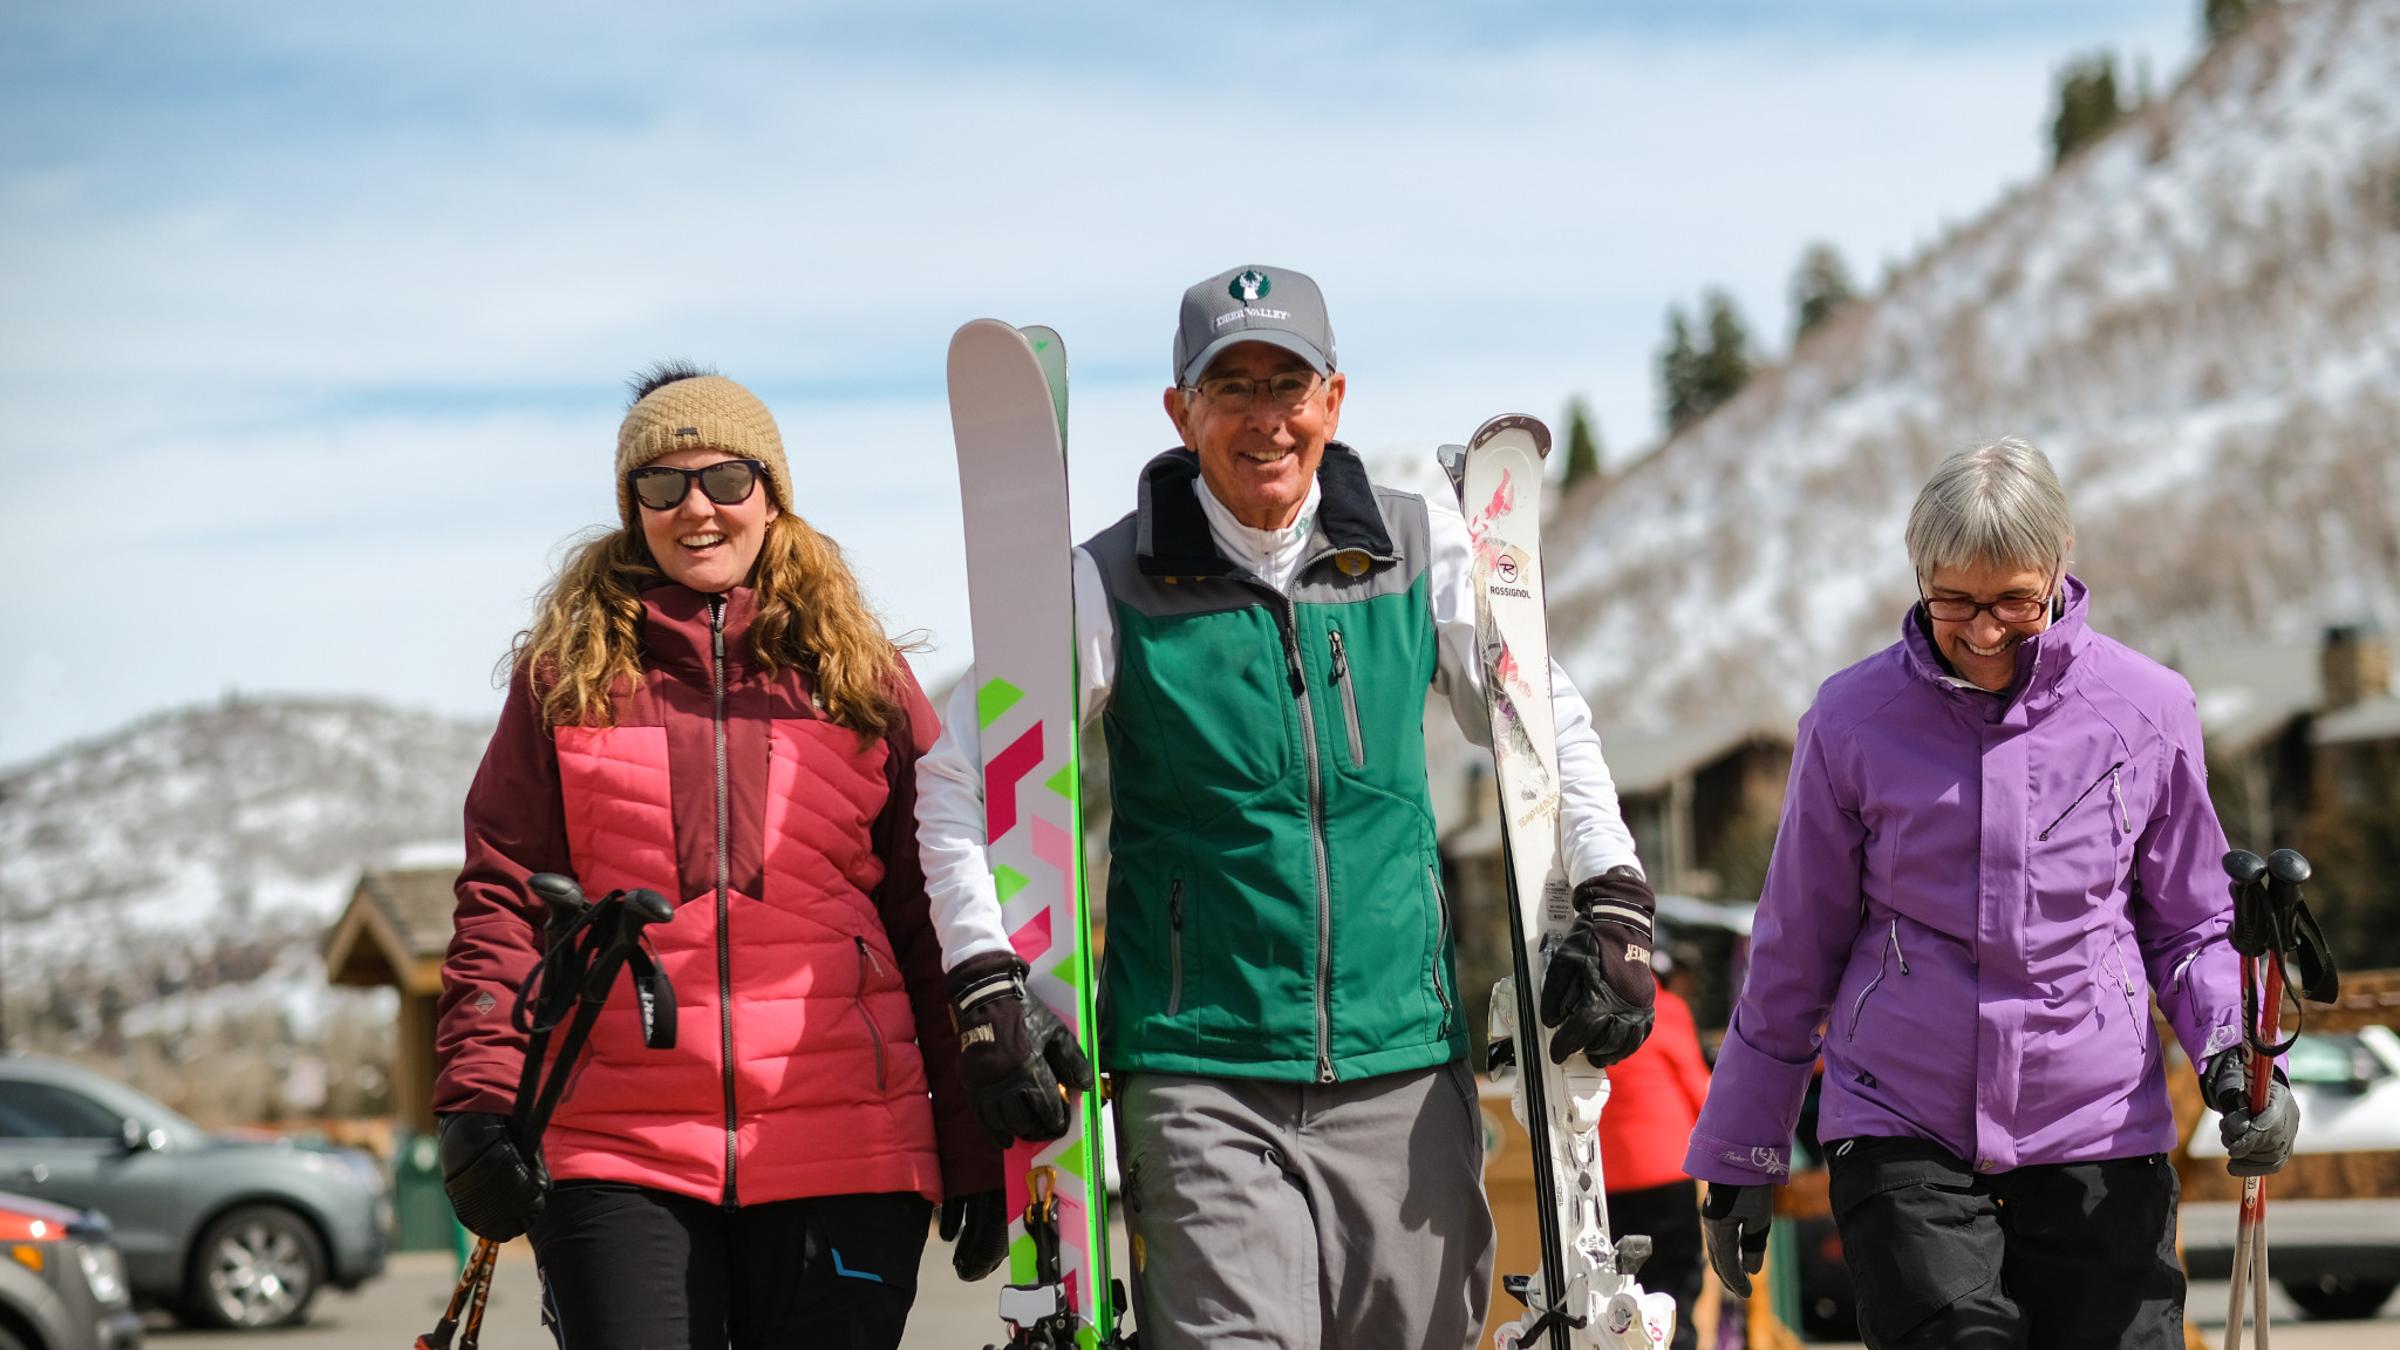 Deer Valley ski valet delivers a guest's skis to Snow Park Lodge